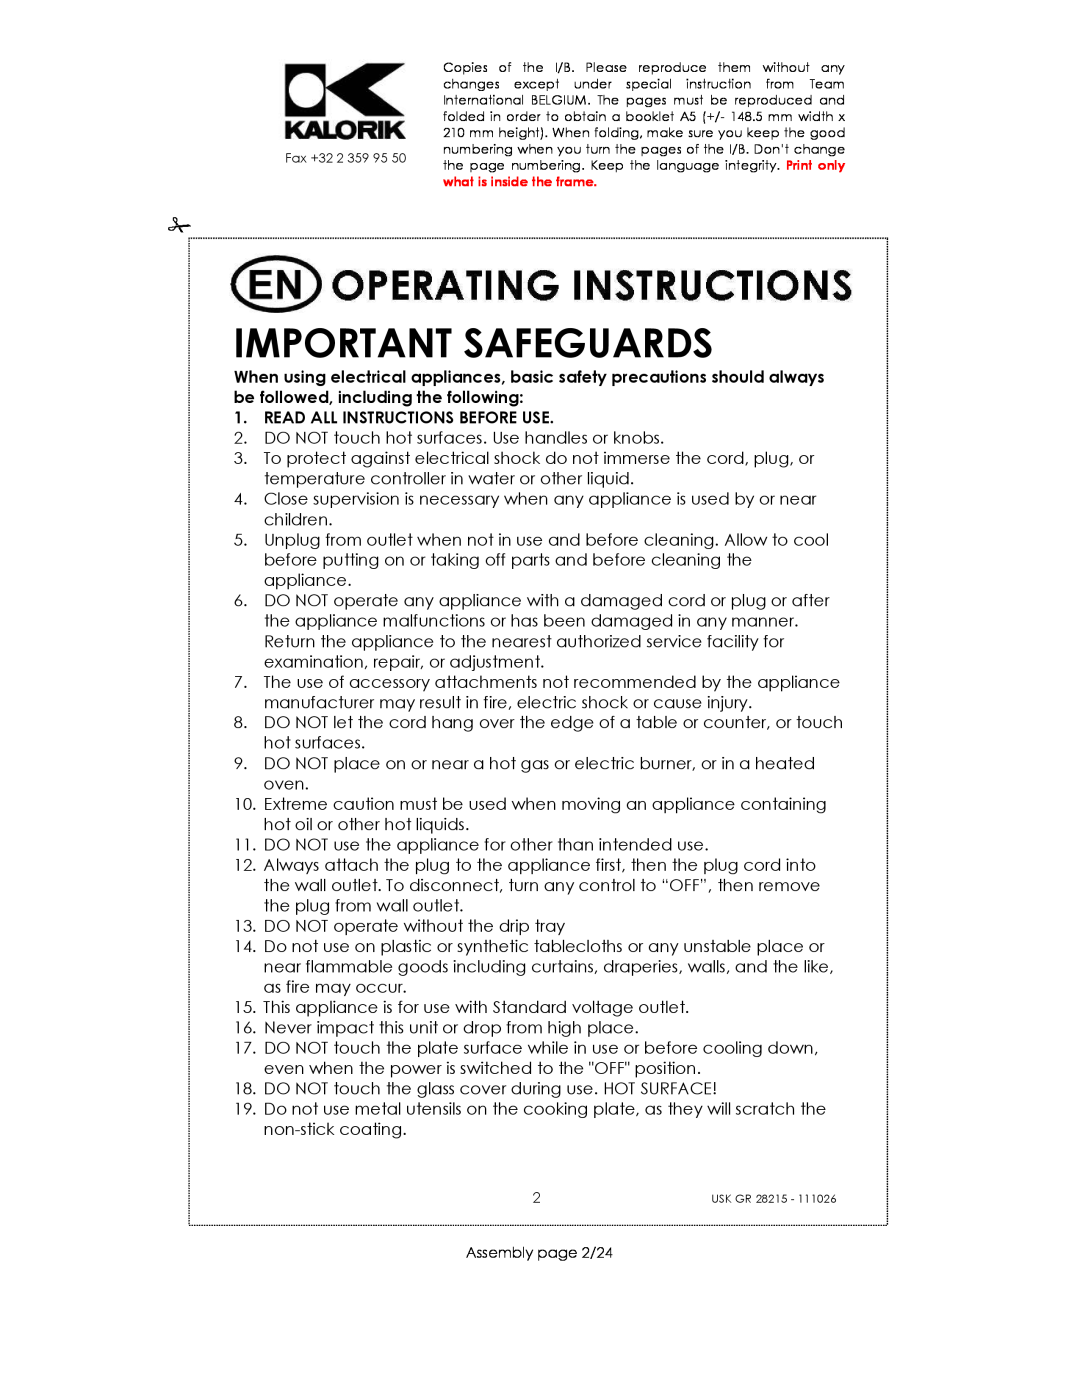 Kalorik USK GR 28215 manual Important Safeguards, Read All Instructions Before Use 